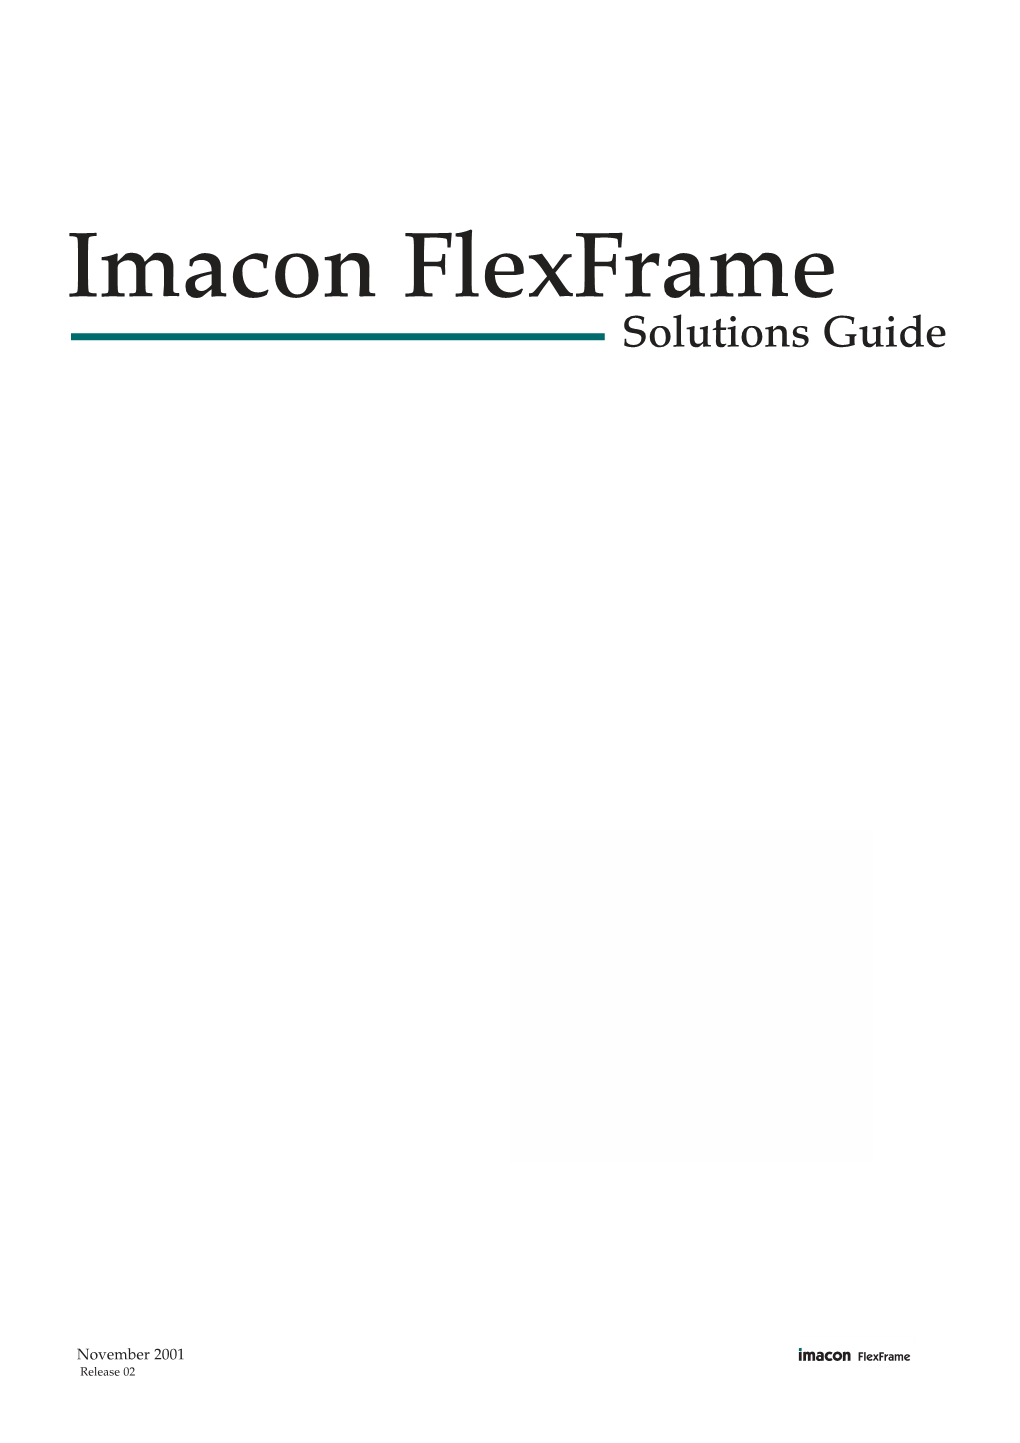 Imacon Flexframe Solutions Guide